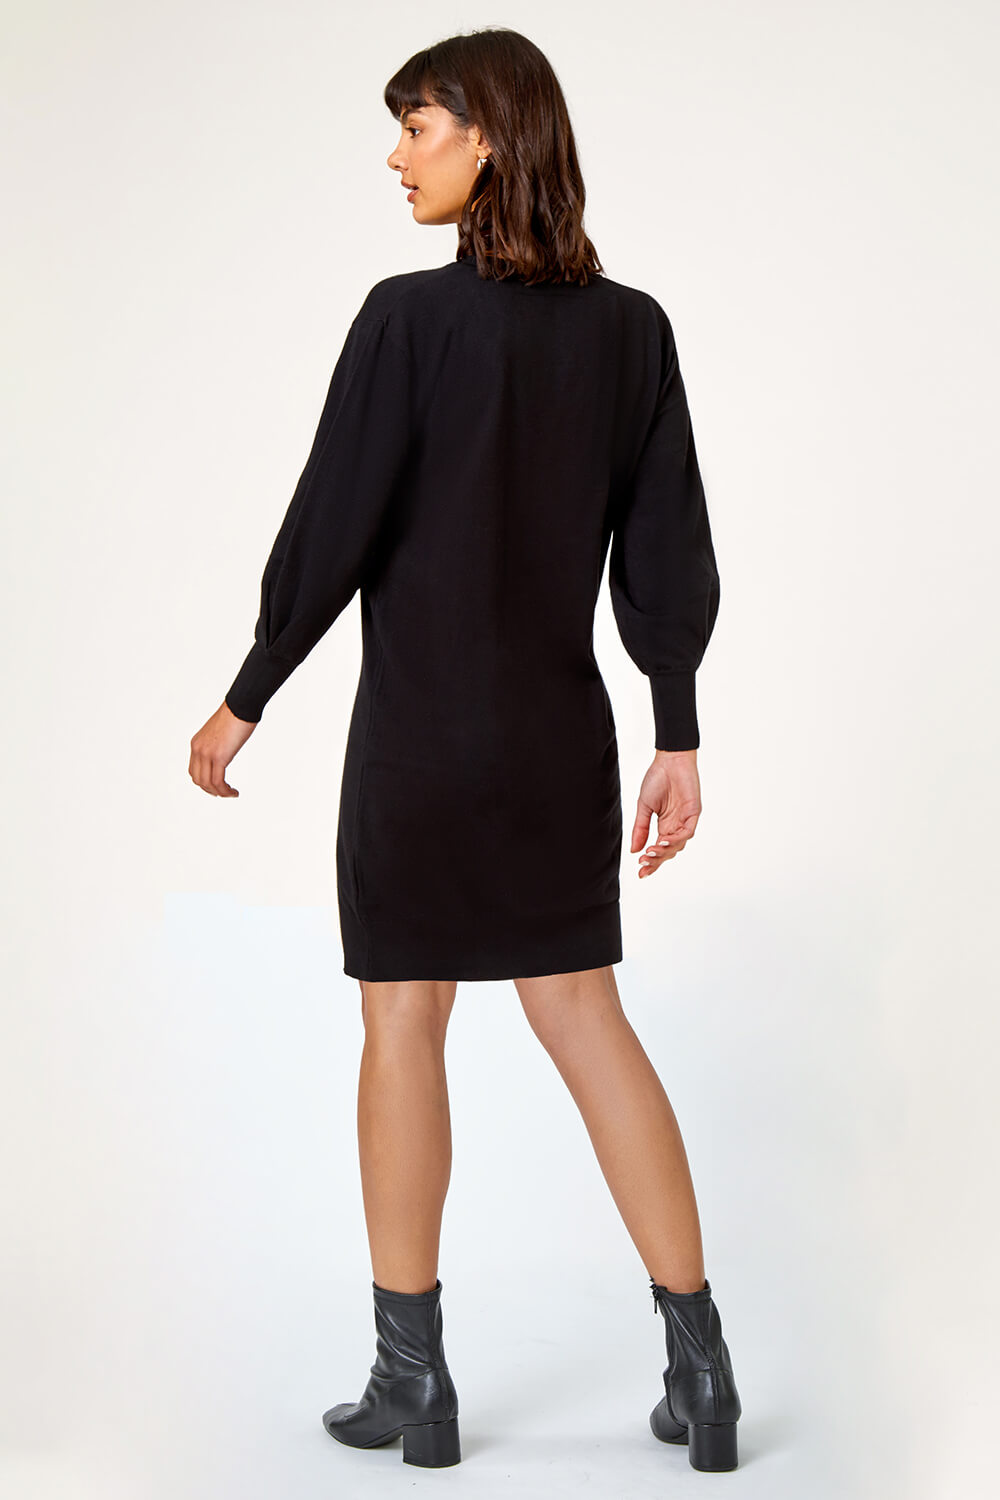 Black Longline Knitted Jumper Dress, Image 2 of 5